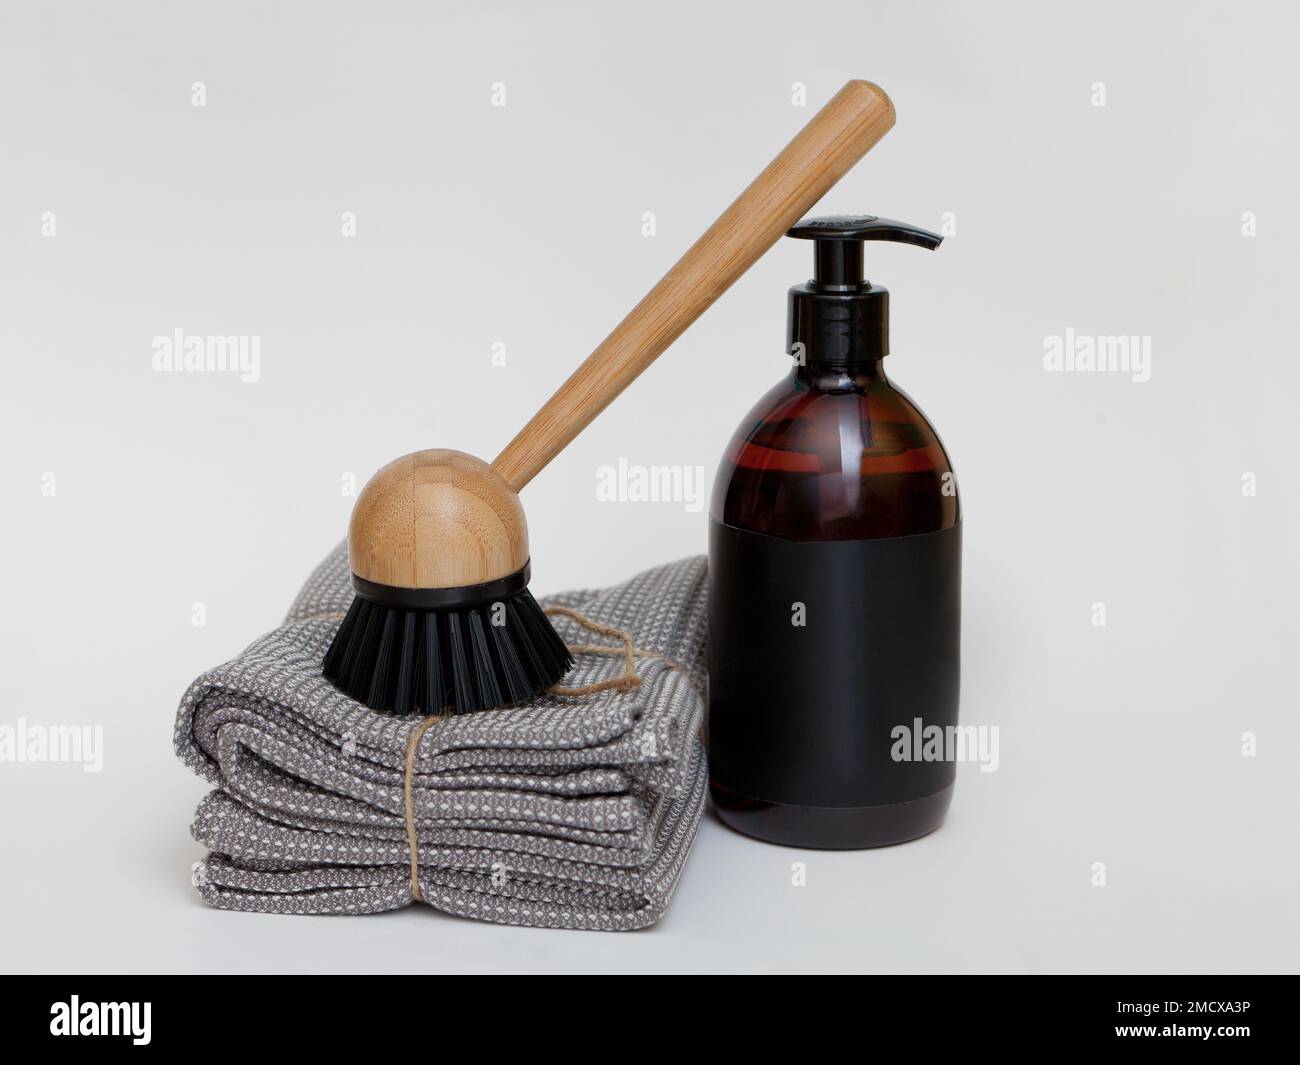 dish washing liquid. bamboo brush and towel. Zero waste kitchen cleaning, eco safe liquid soap jar Stock Photo